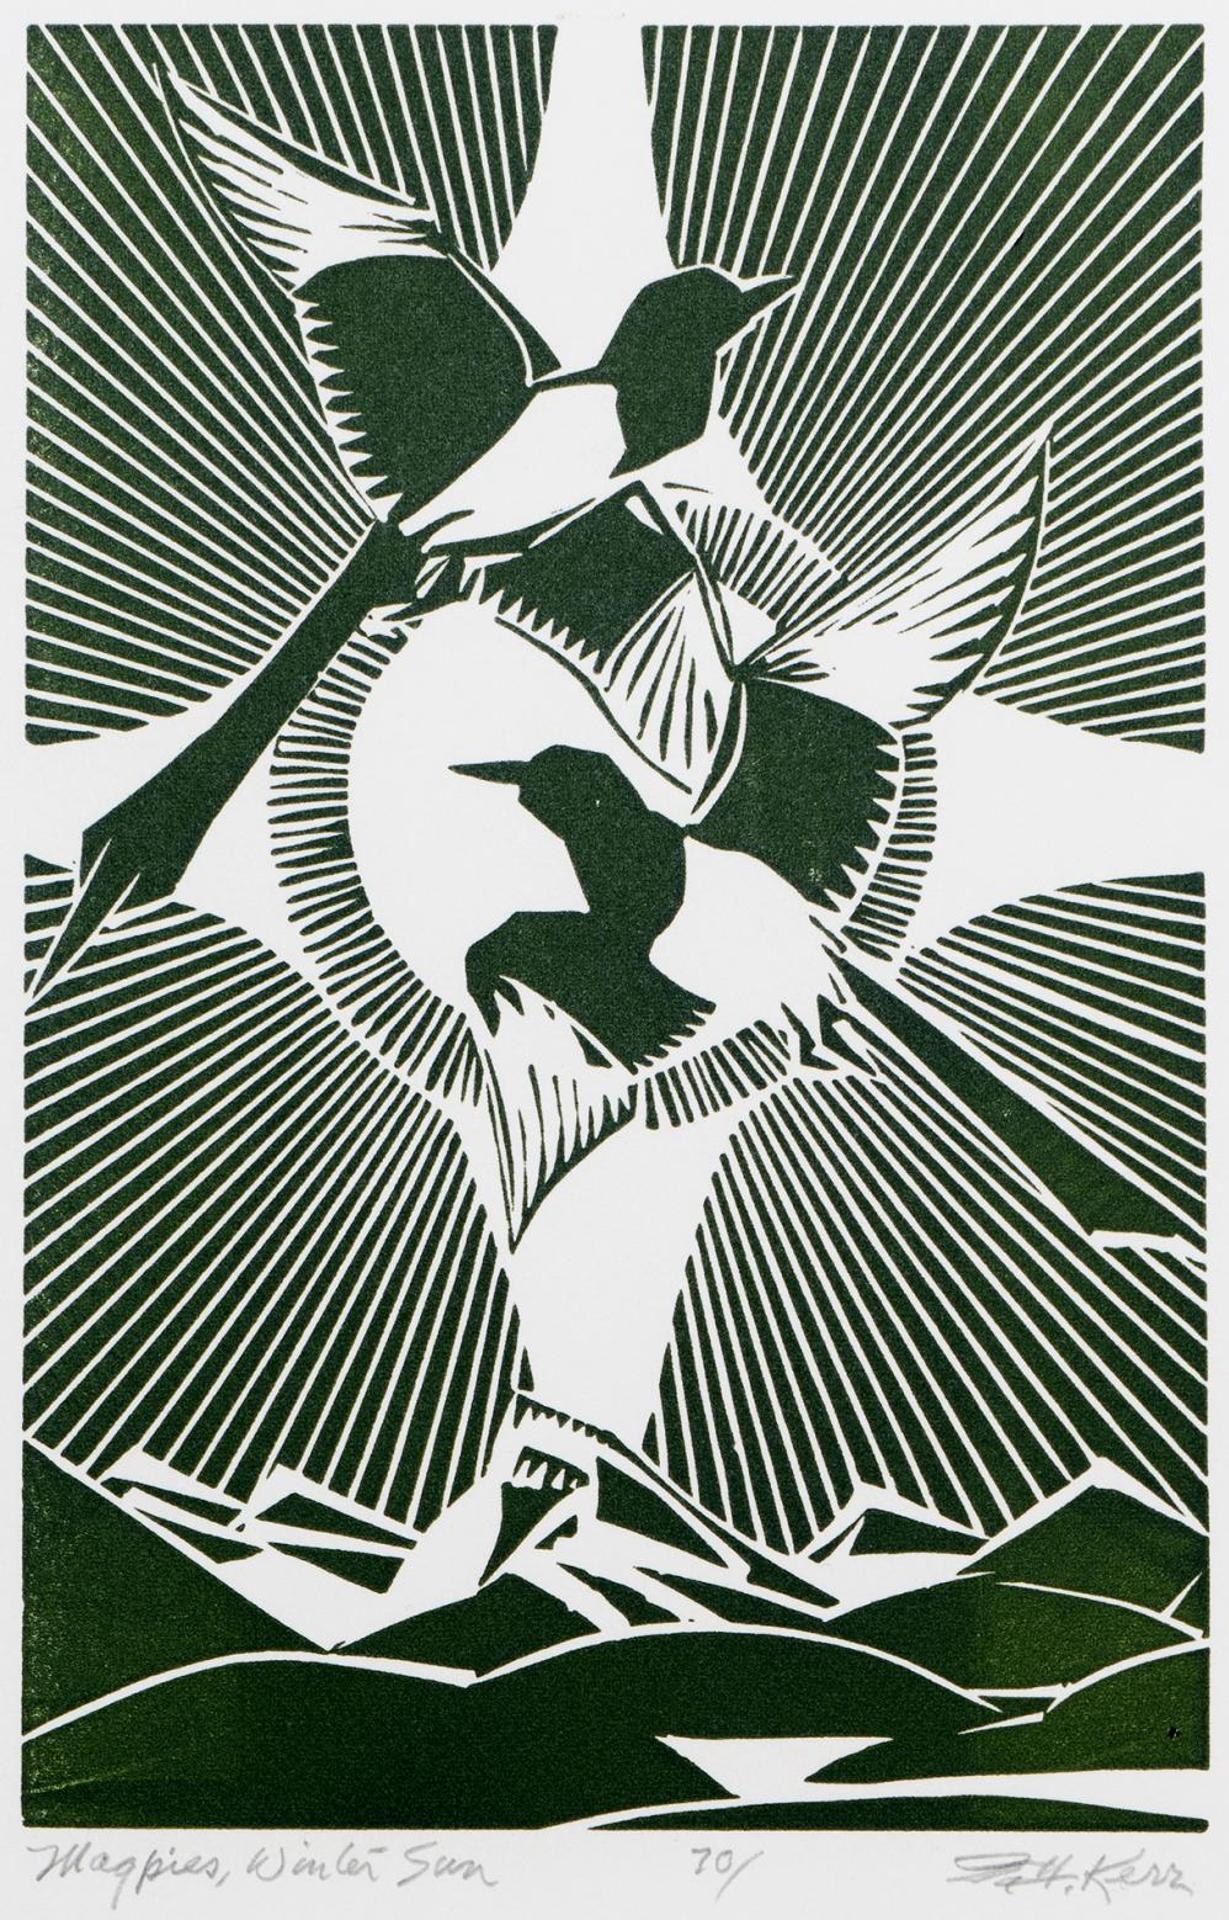 Illingworth Holey (Buck) Kerr (1905-1989) - Magpies Winter Sun